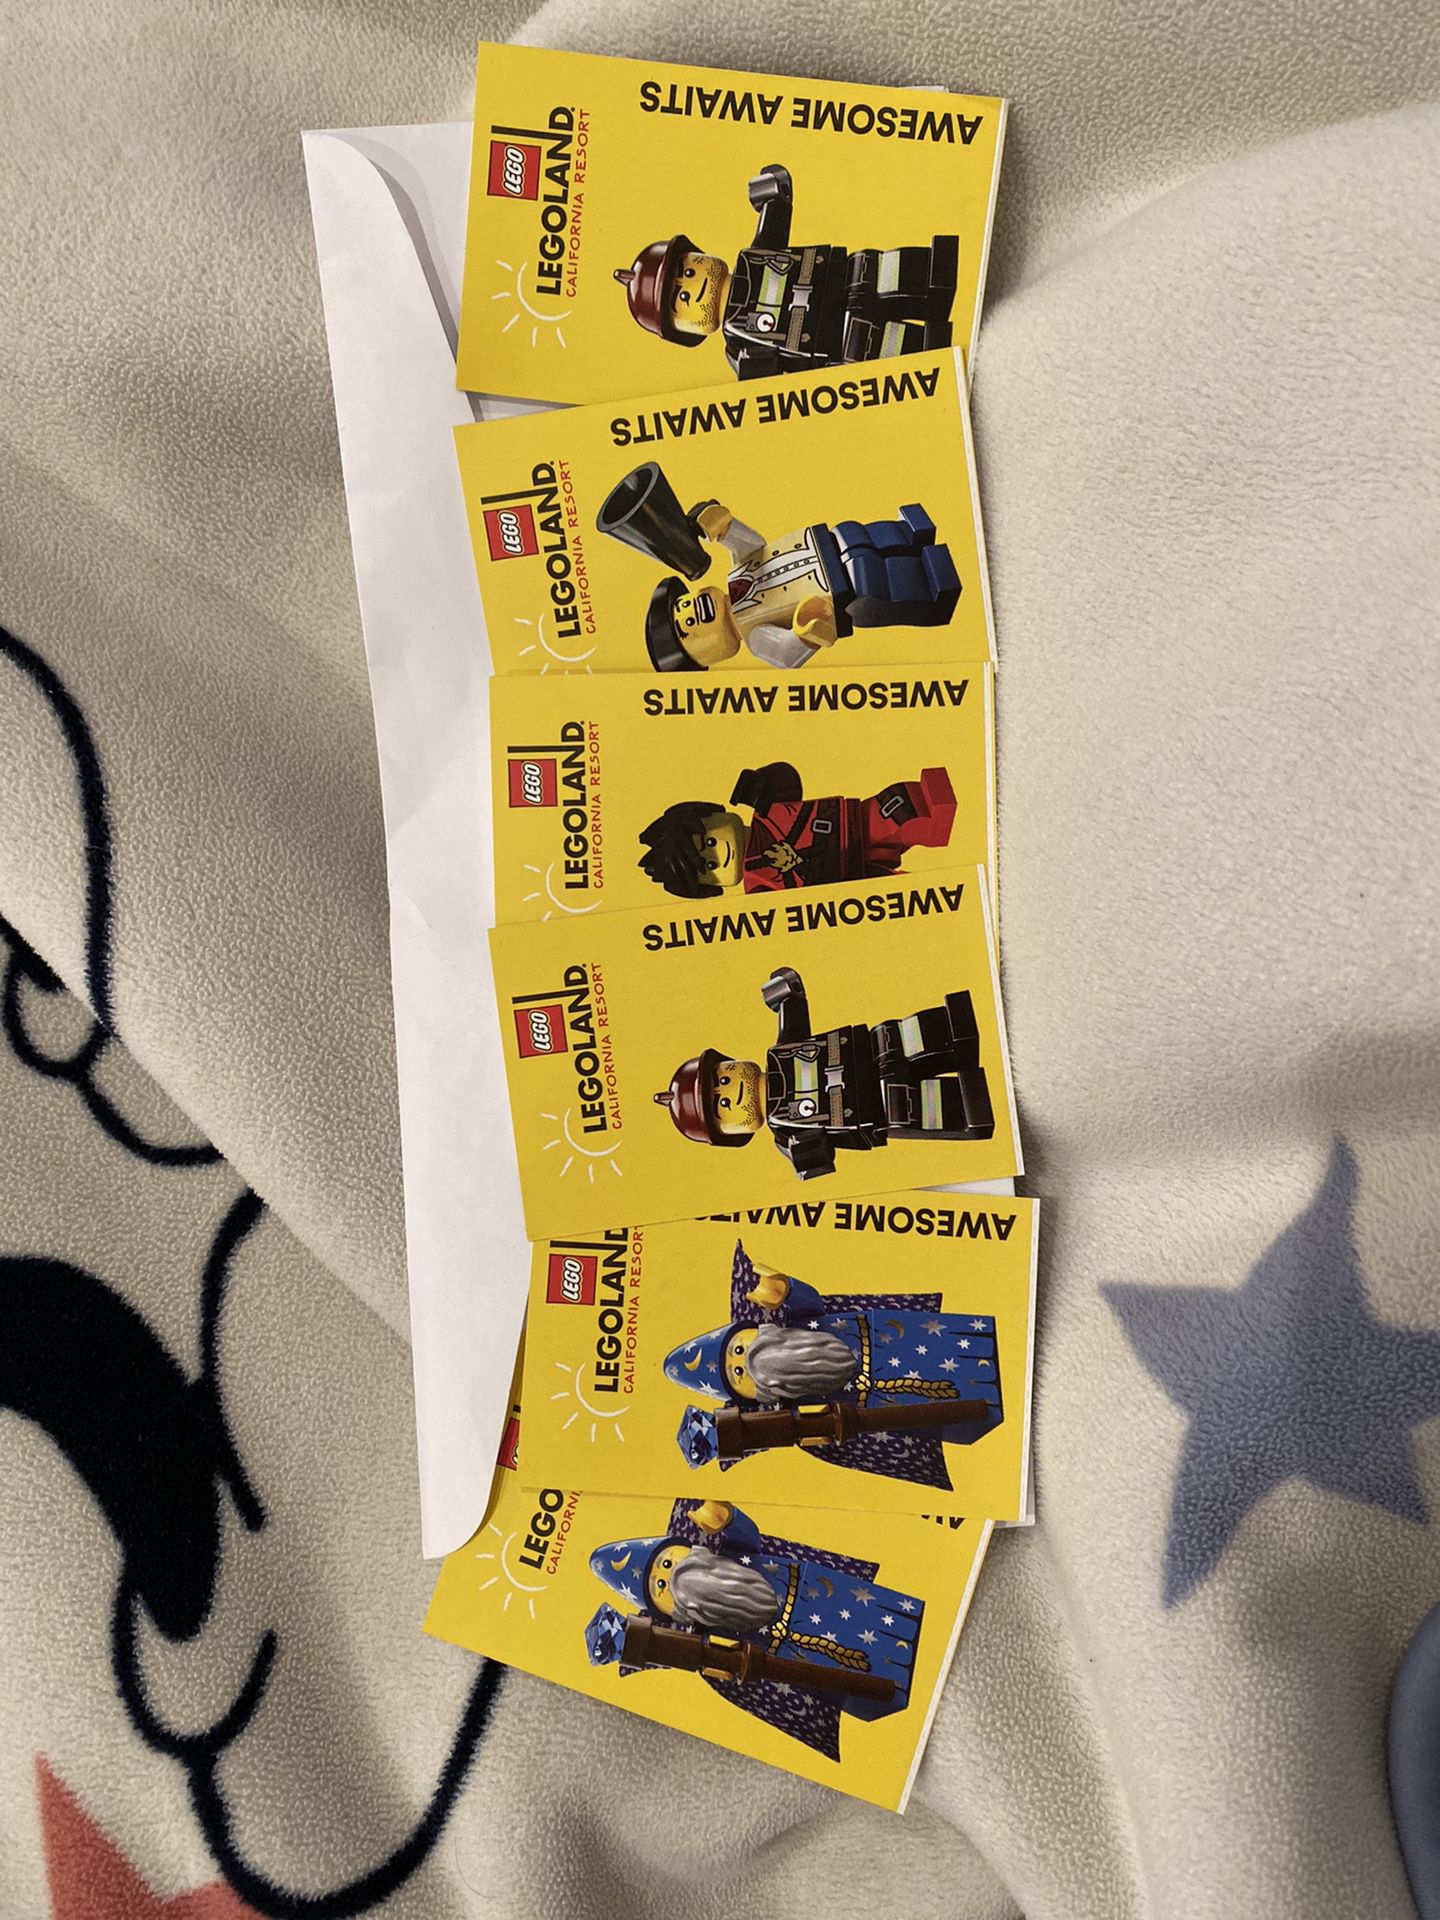 Legoland tickets